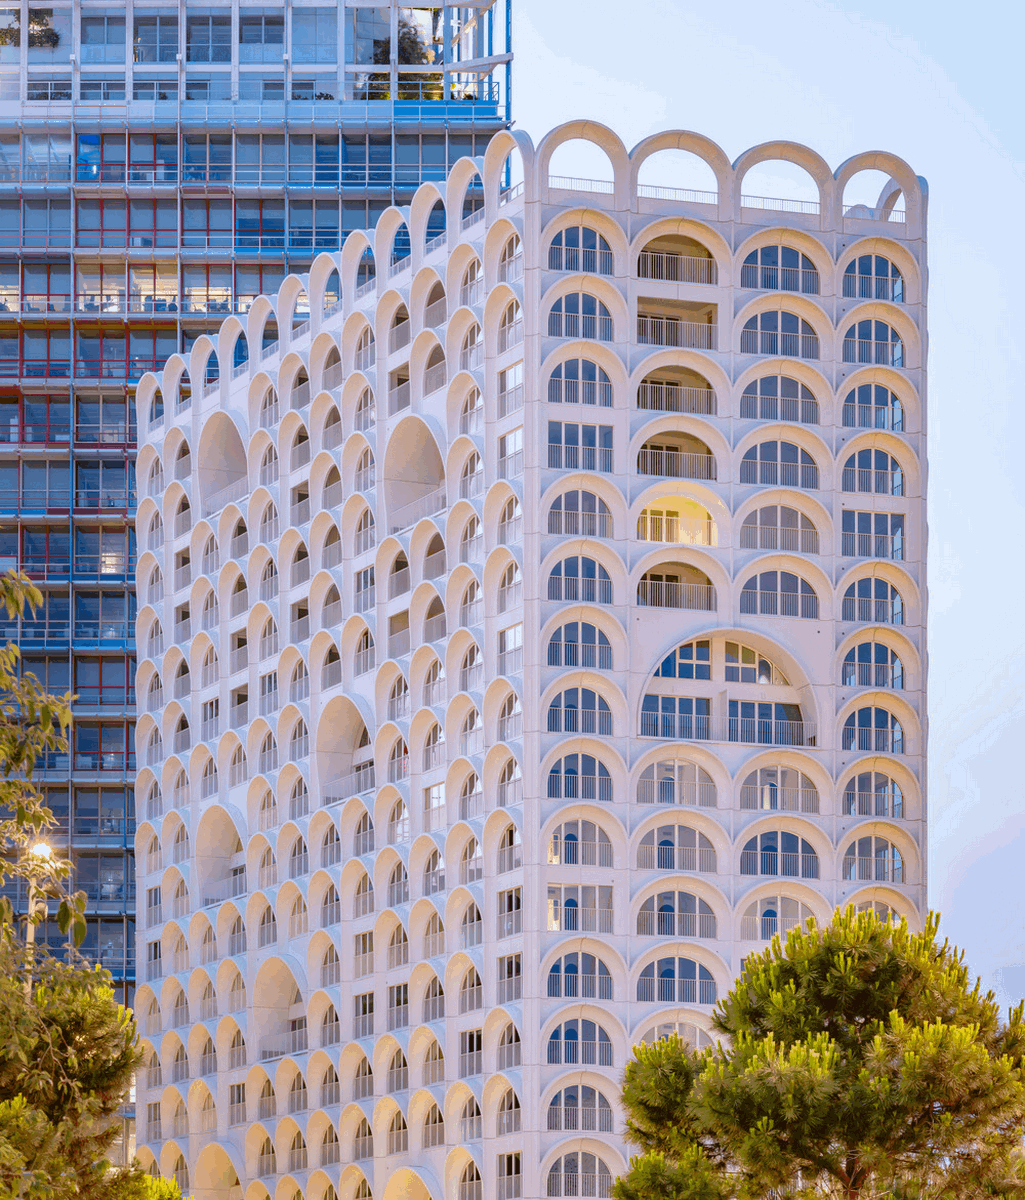 La Porte Bleue Hotel Marseille France